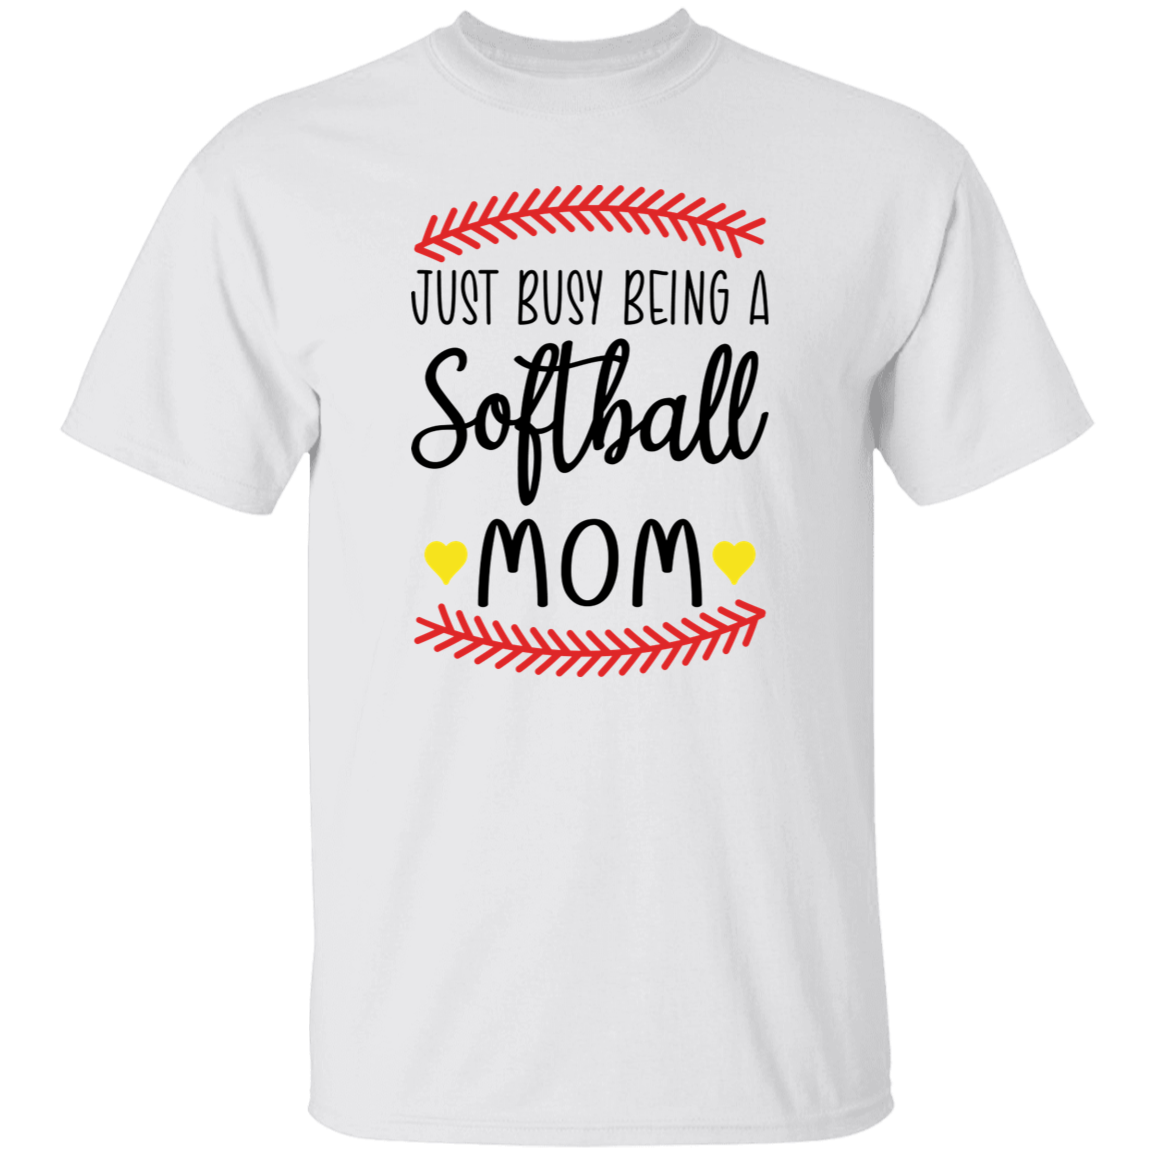 Busy Being a Softball Mom T-Shirt